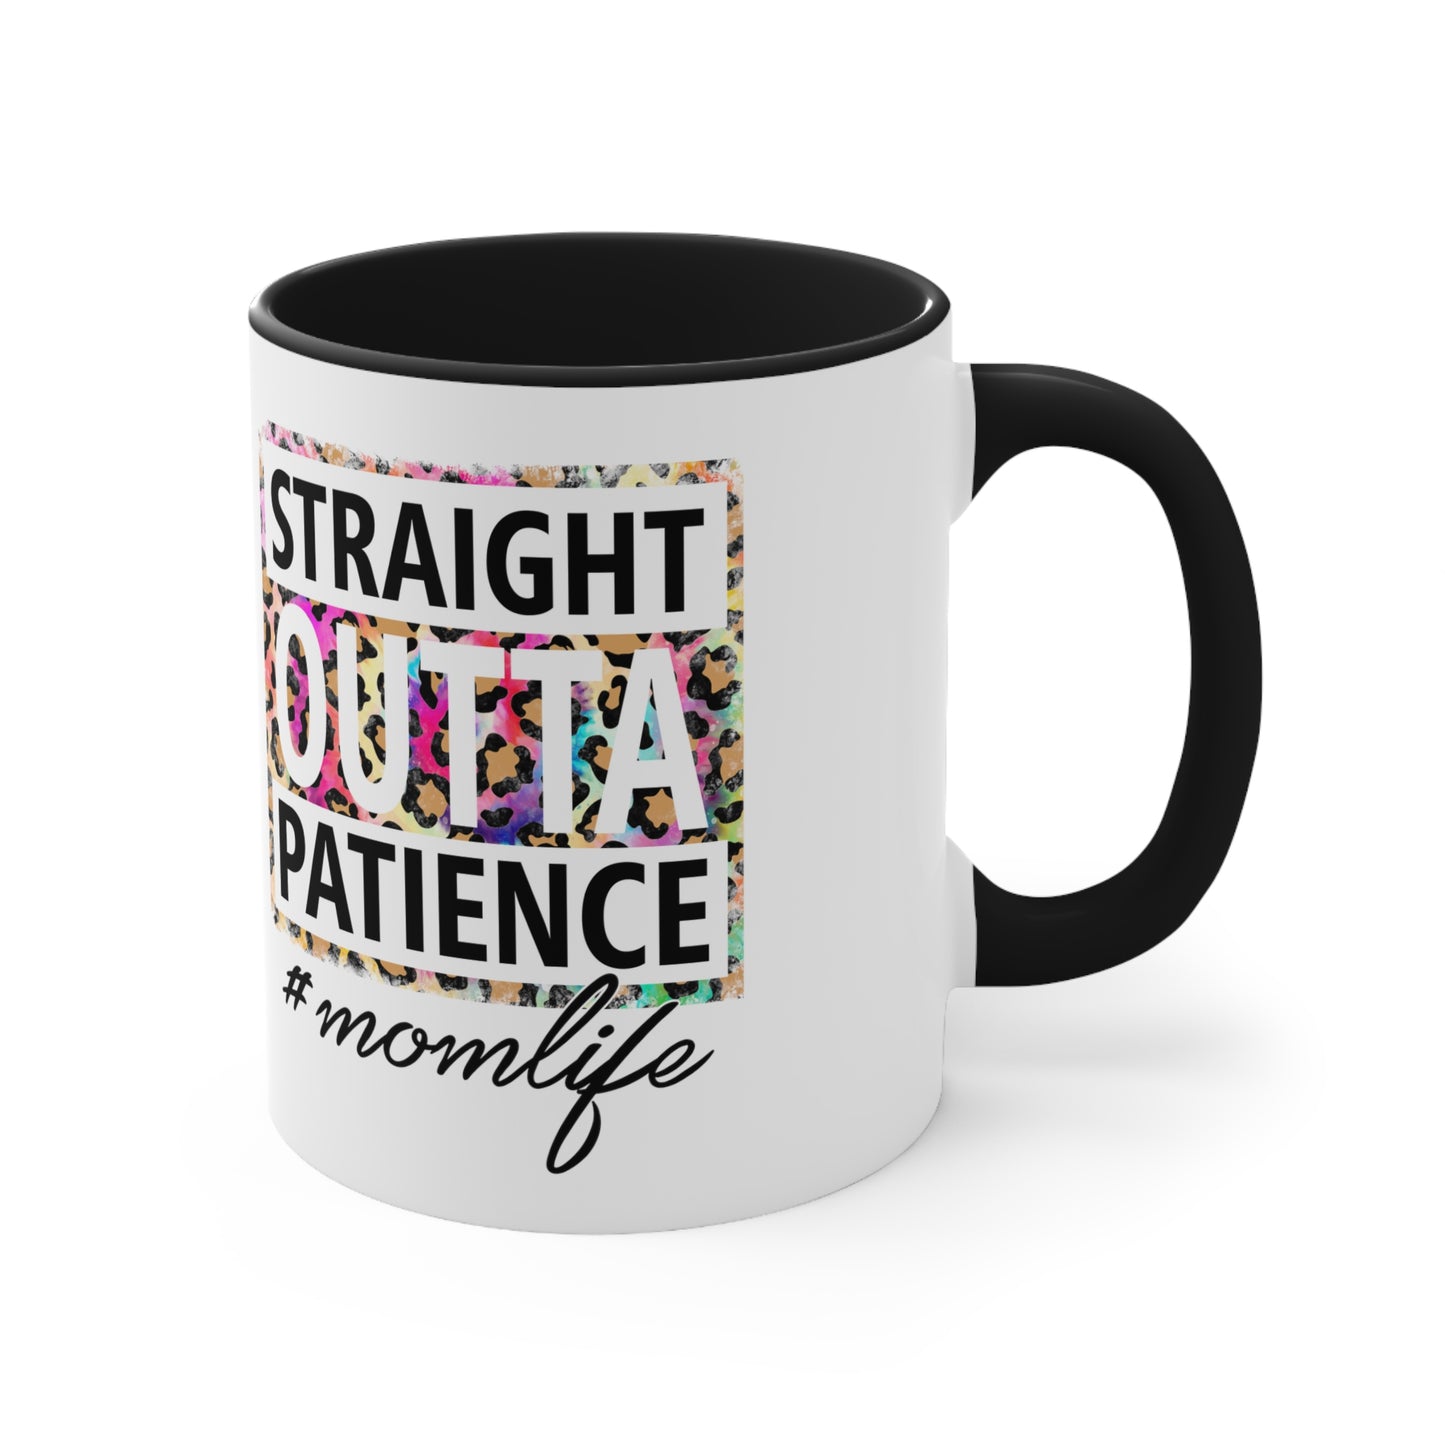 Straight outta patience Tonic Tea Mug